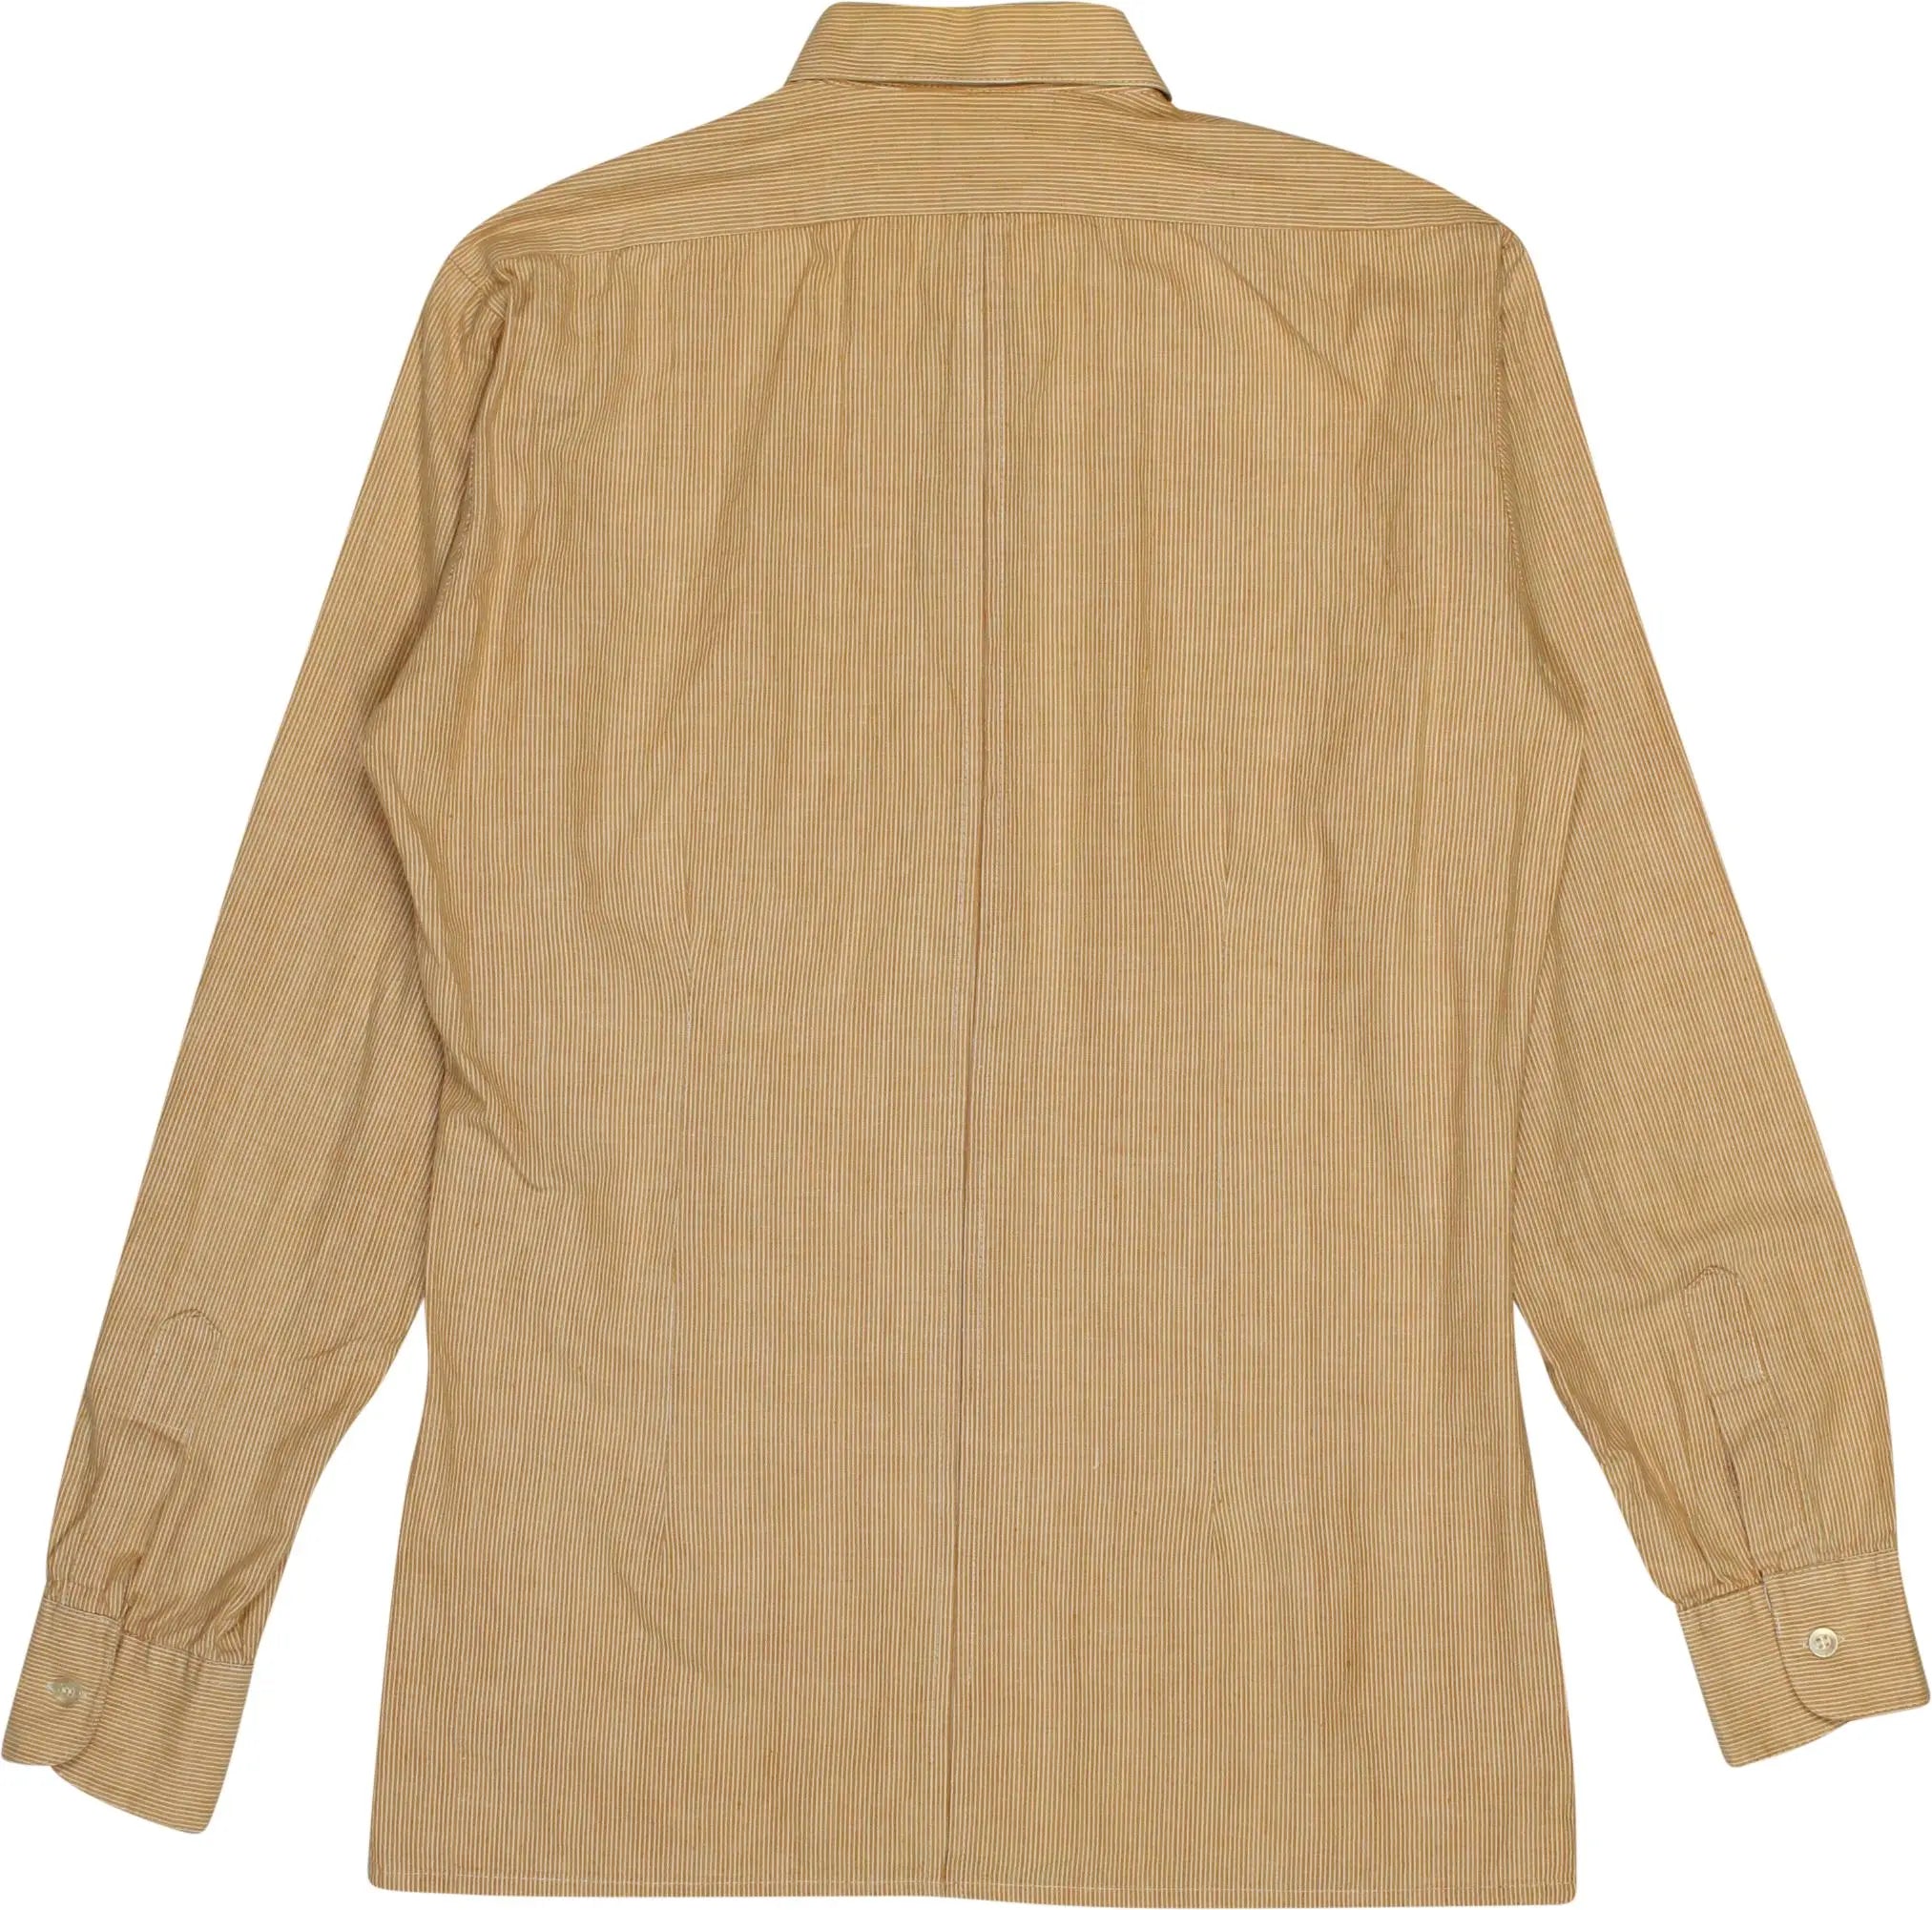 Dressman - Orange Striped Shirt- ThriftTale.com - Vintage and second handclothing